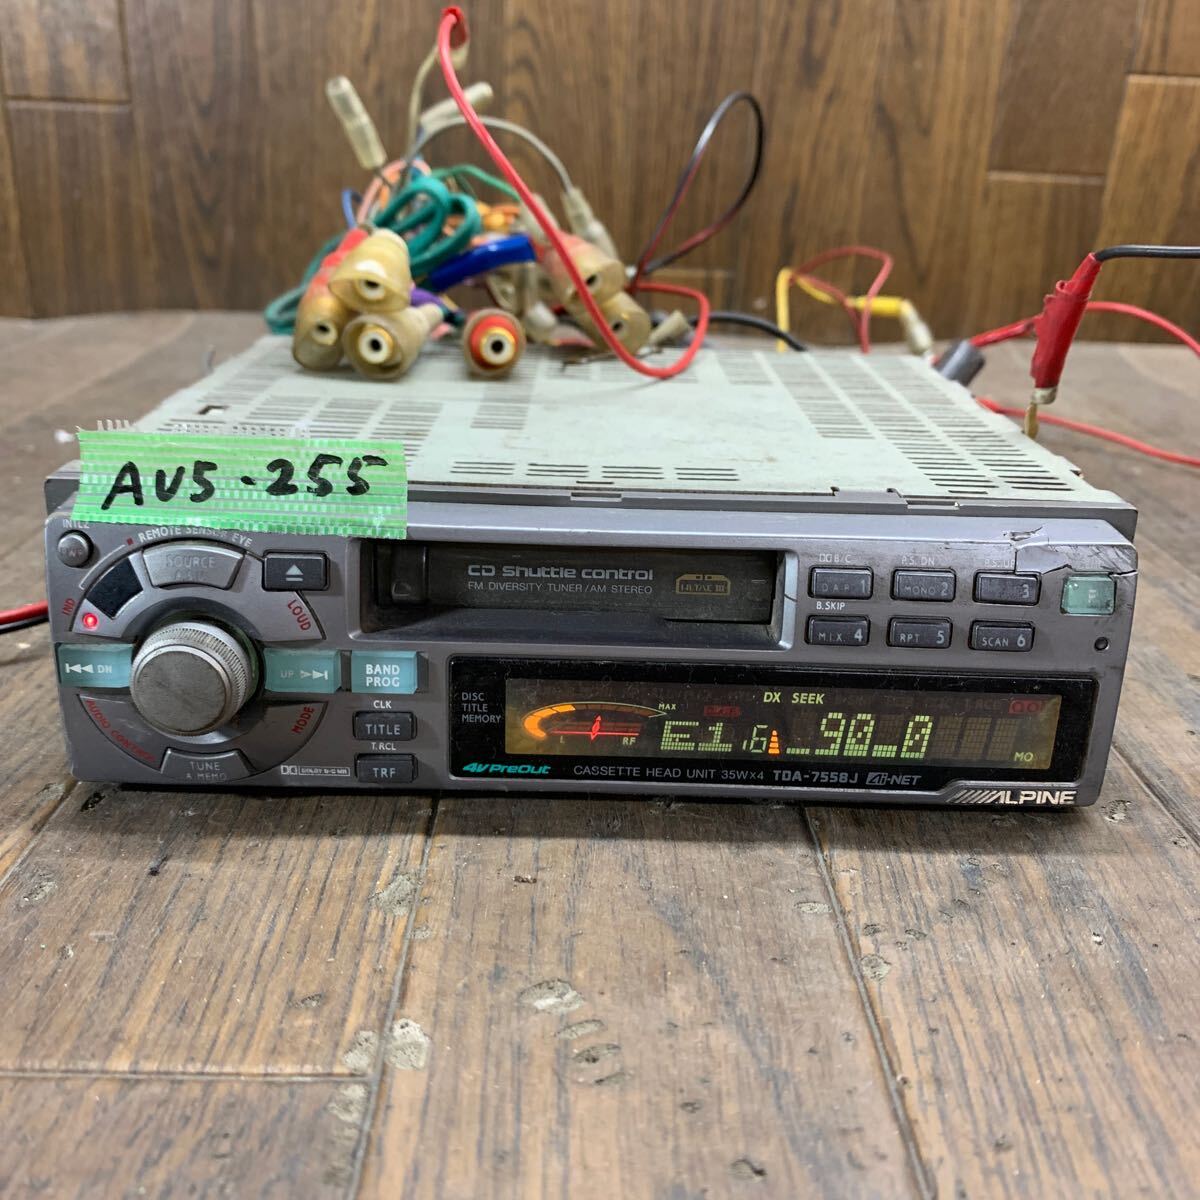 AV5-255 super-discount car stereo ALPINE Alpine TDA-7558J R60510193 cassette FM/AM tape deck body only simple operation verification ending used present condition goods 